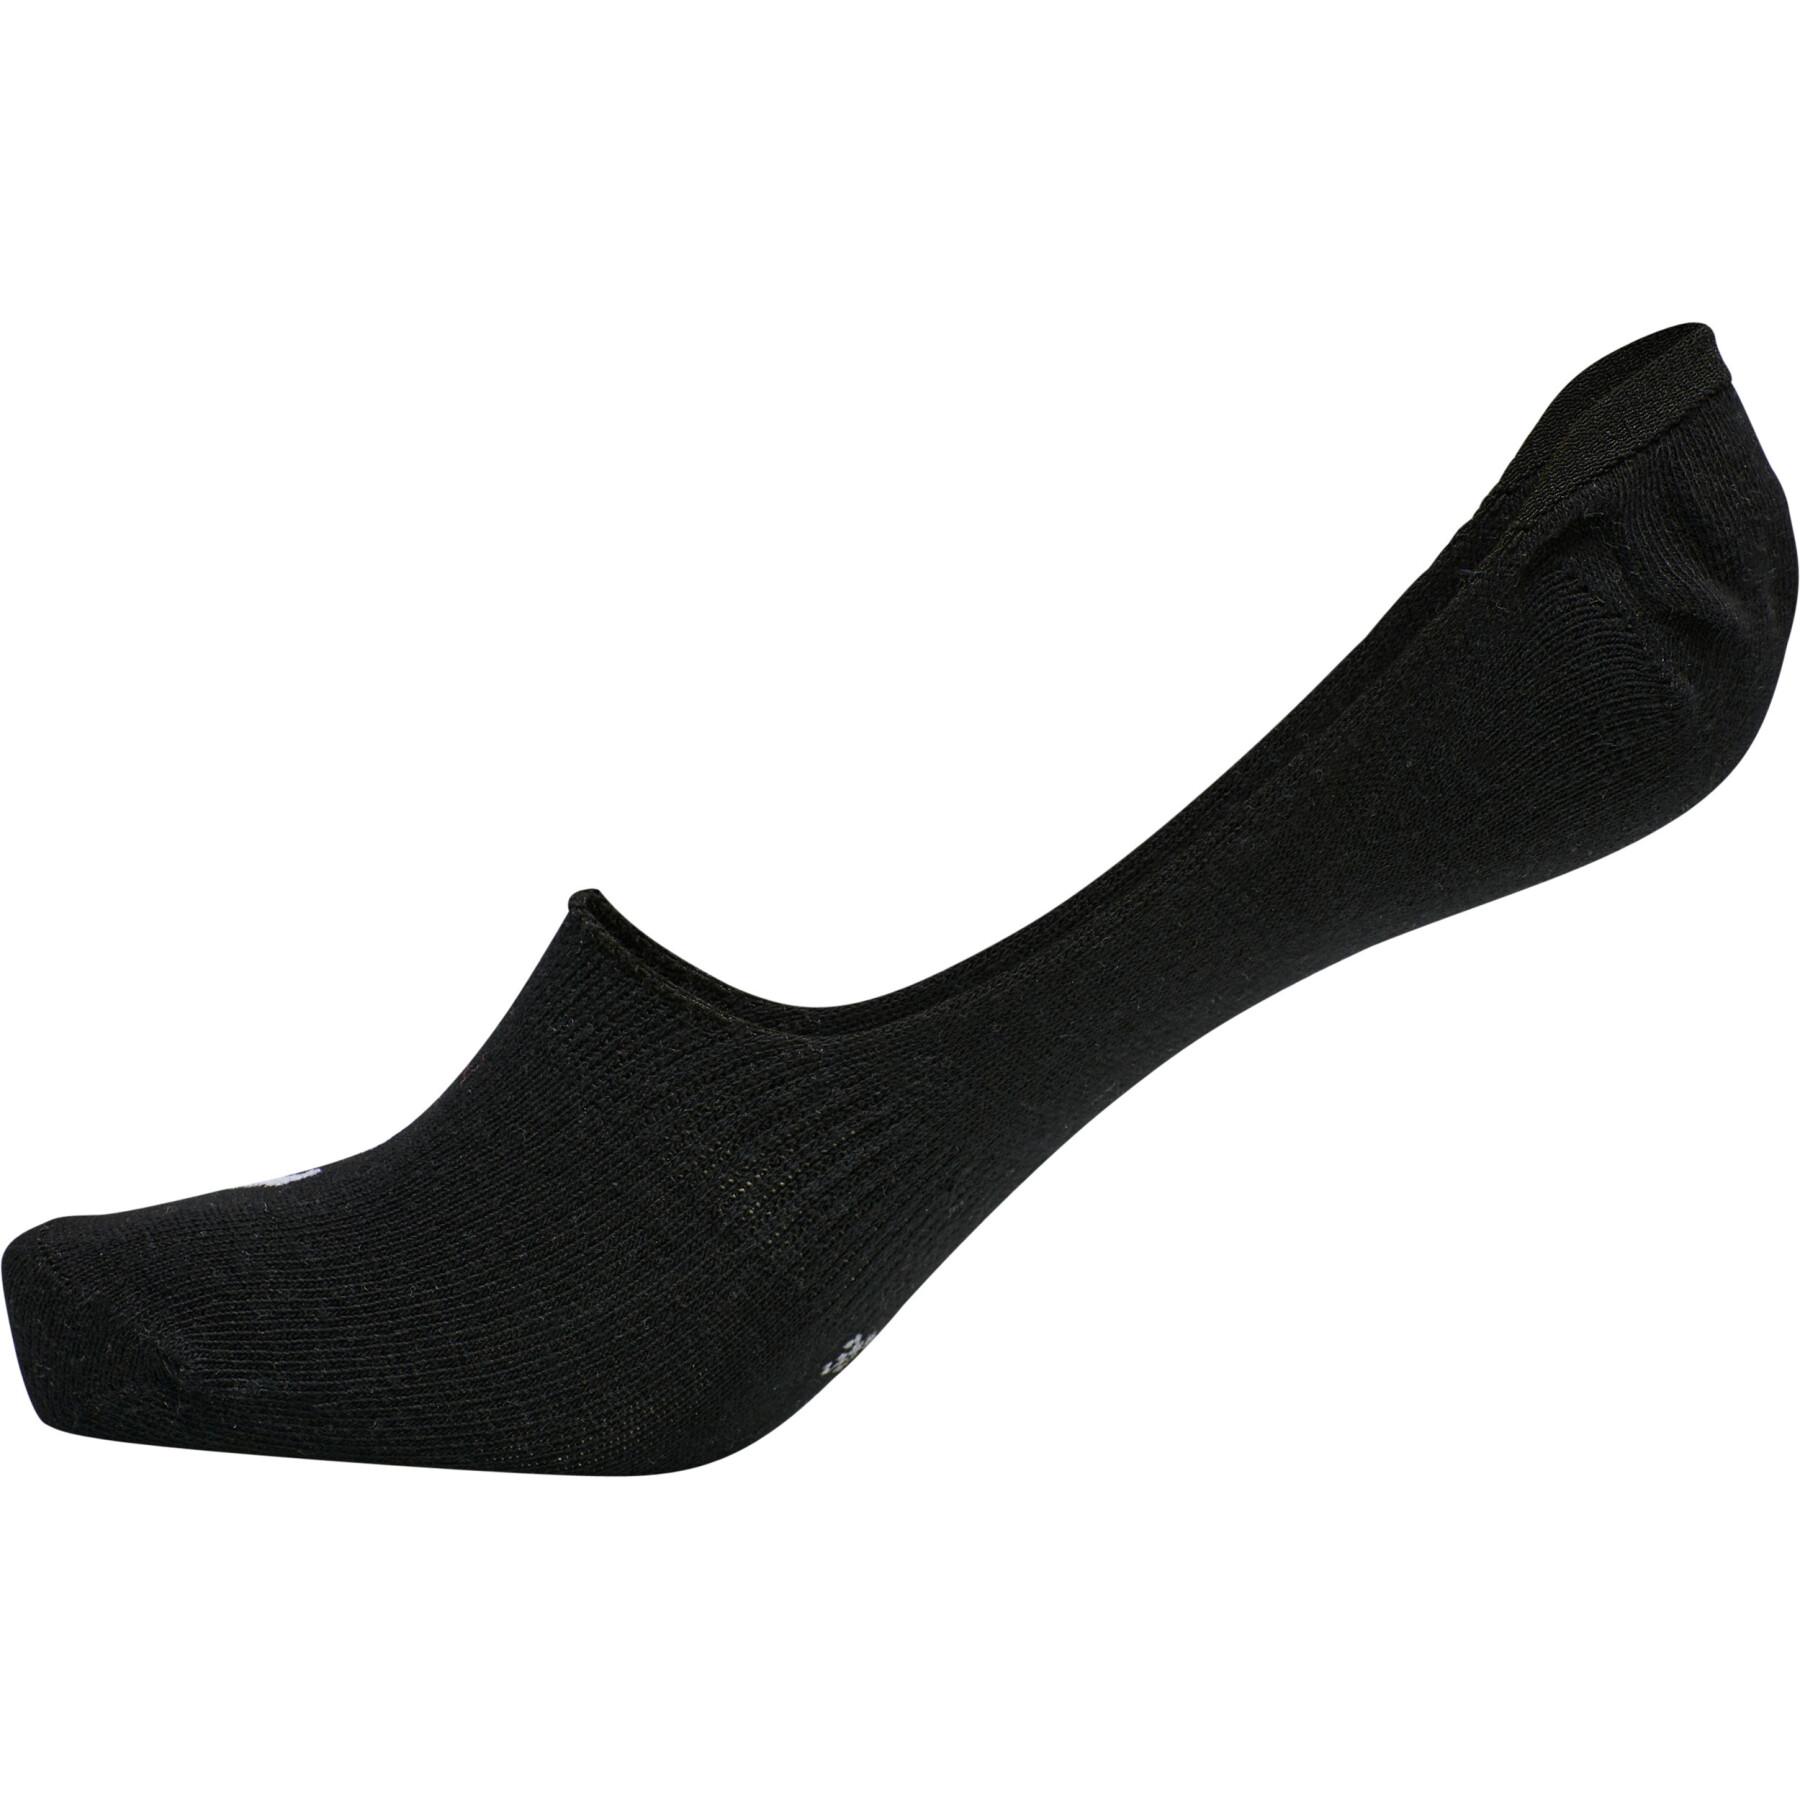 Onzichtbare sokken Hummel Chevron (x6)